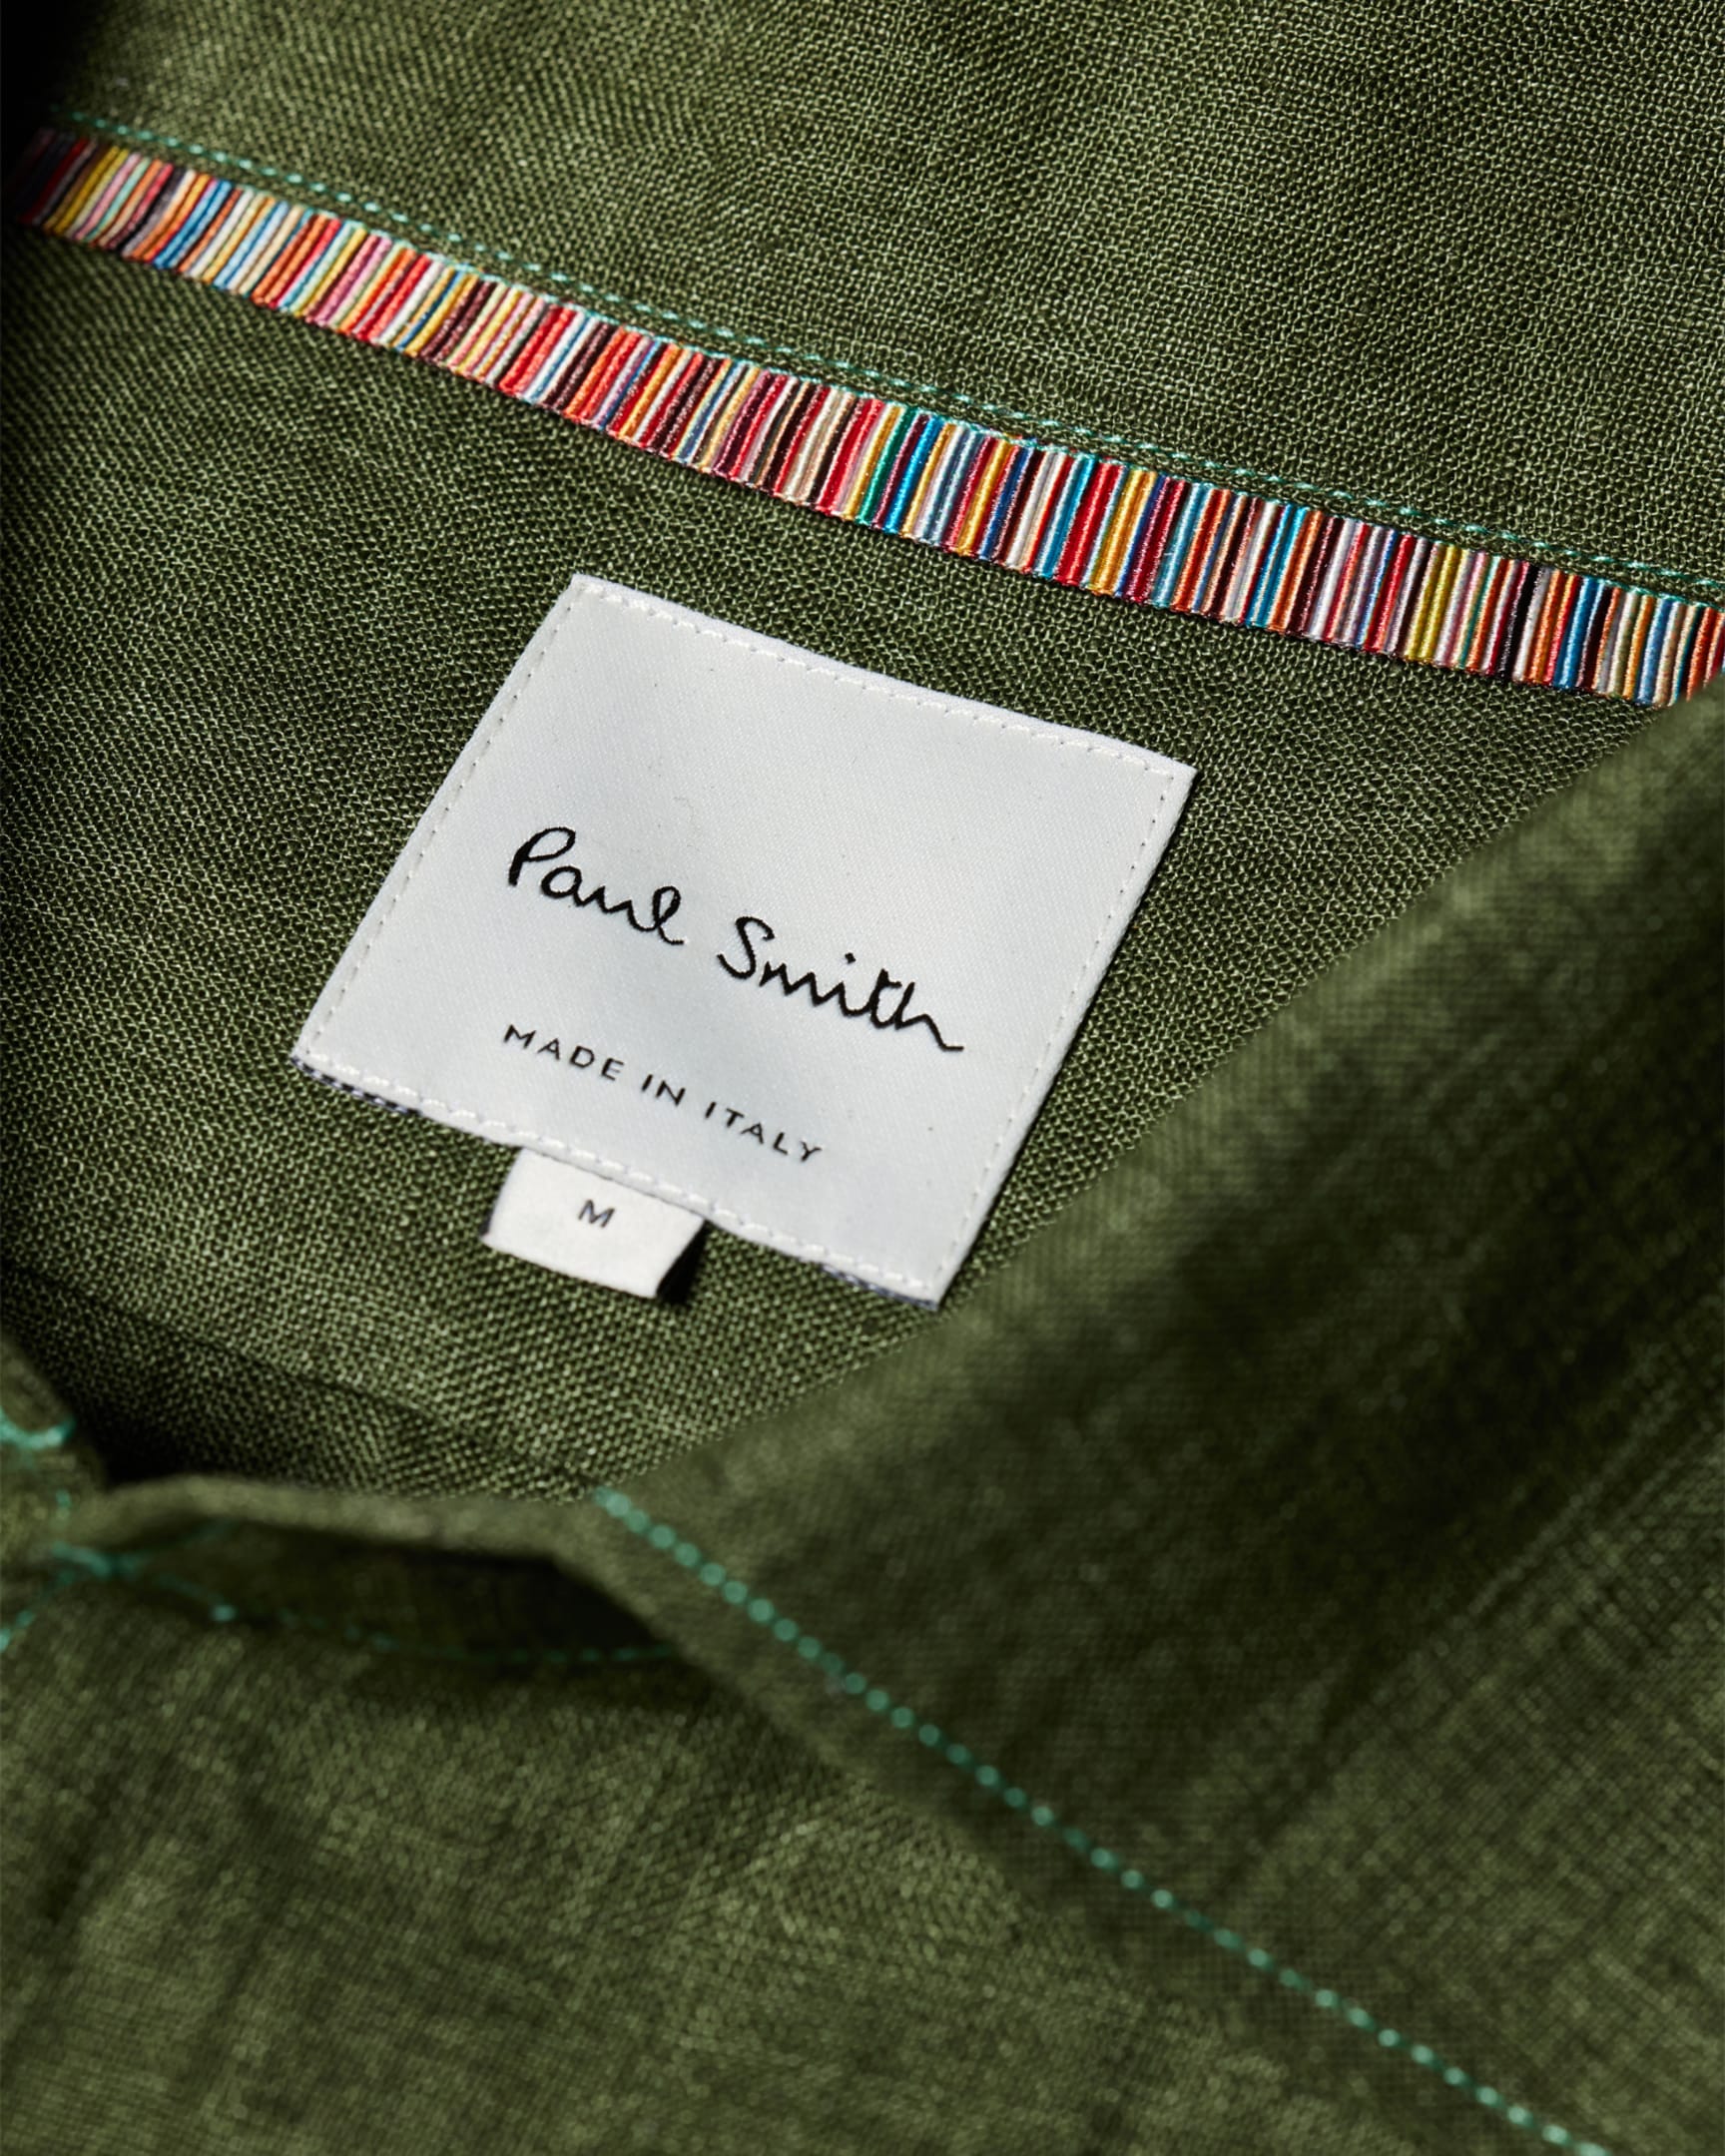 Detail View - Slim-Fit Dark Green Linen Shirt Paul Smith